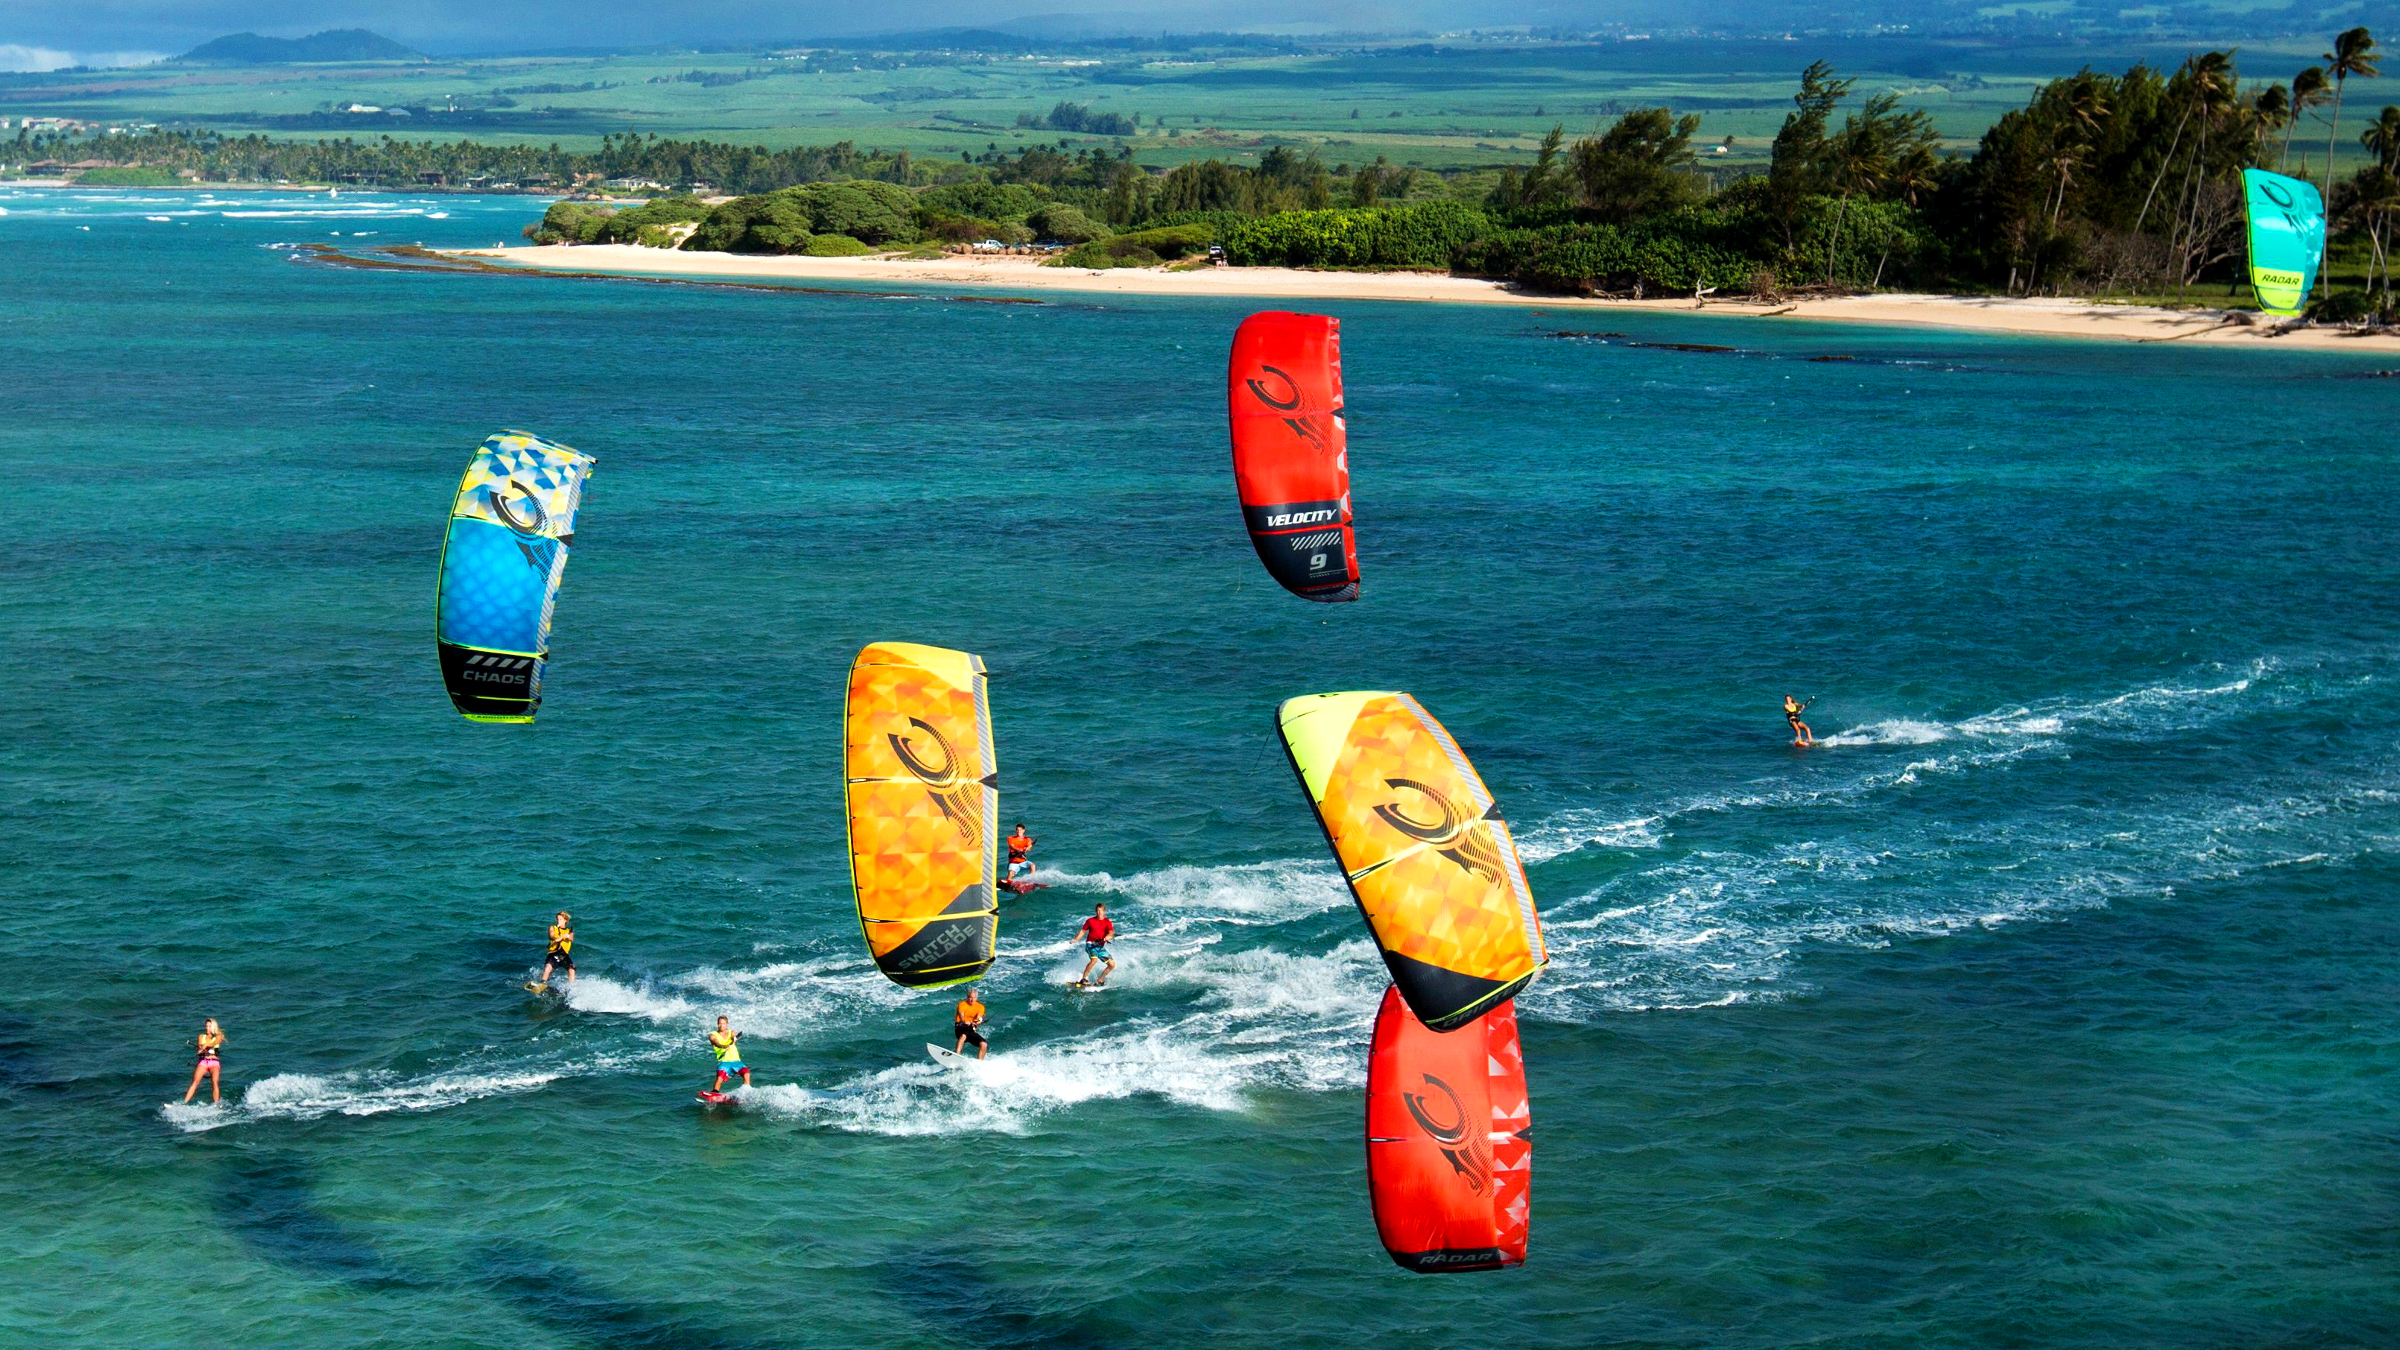 kitesurf wallpaper image - The 2015 Cabrinha Kites teamriders kitesurfing off the coast of Hawaii. - in resolution: High Definition - HD 16:9 2400 X 1350